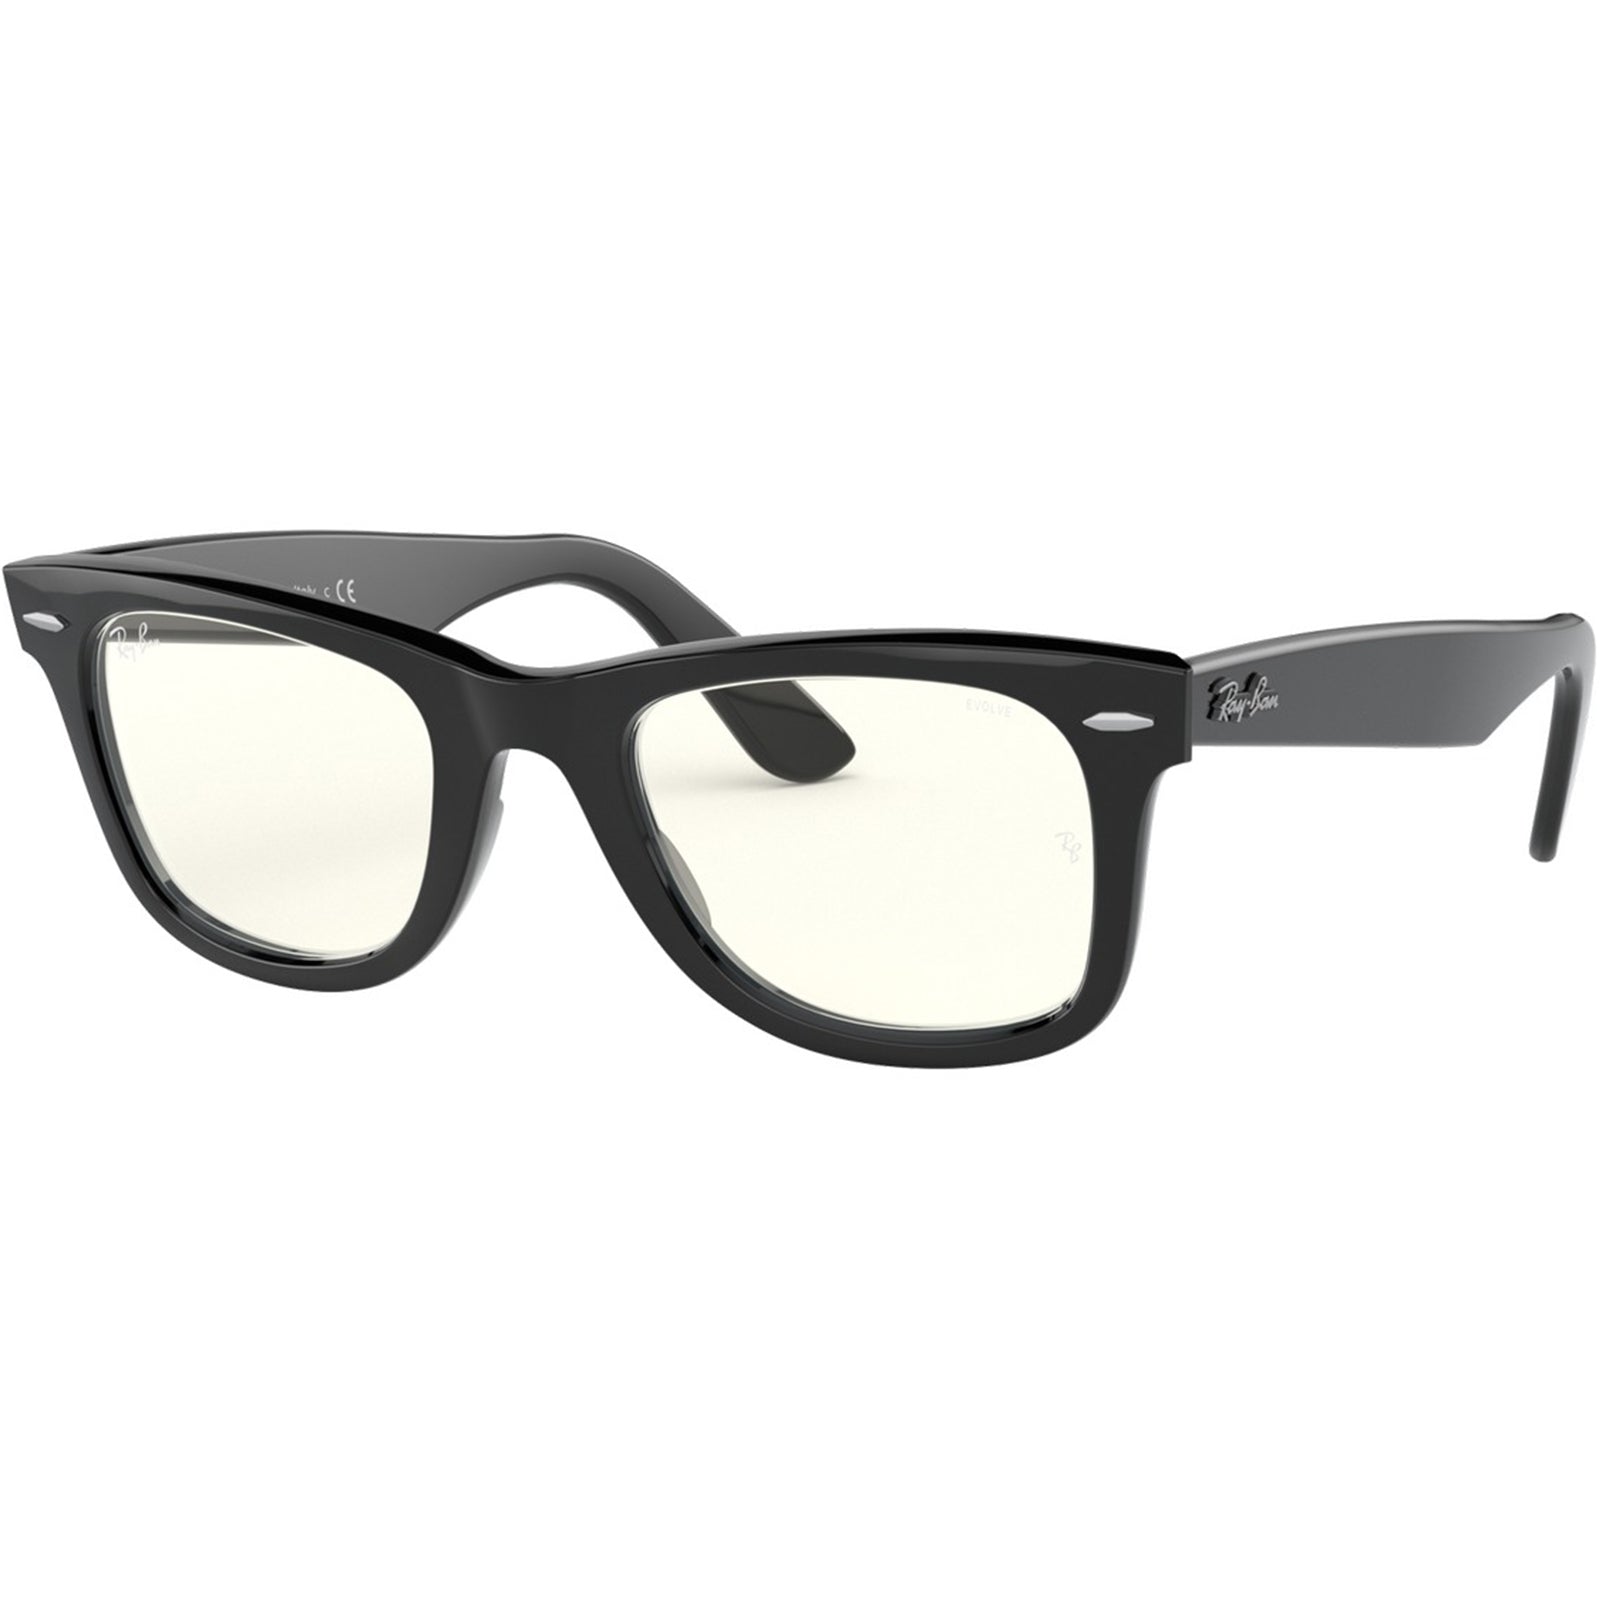 Ray-Ban Wayfarer Clear Evolve Adult Lifestyle Polarized Sunglasses-0RB2140F